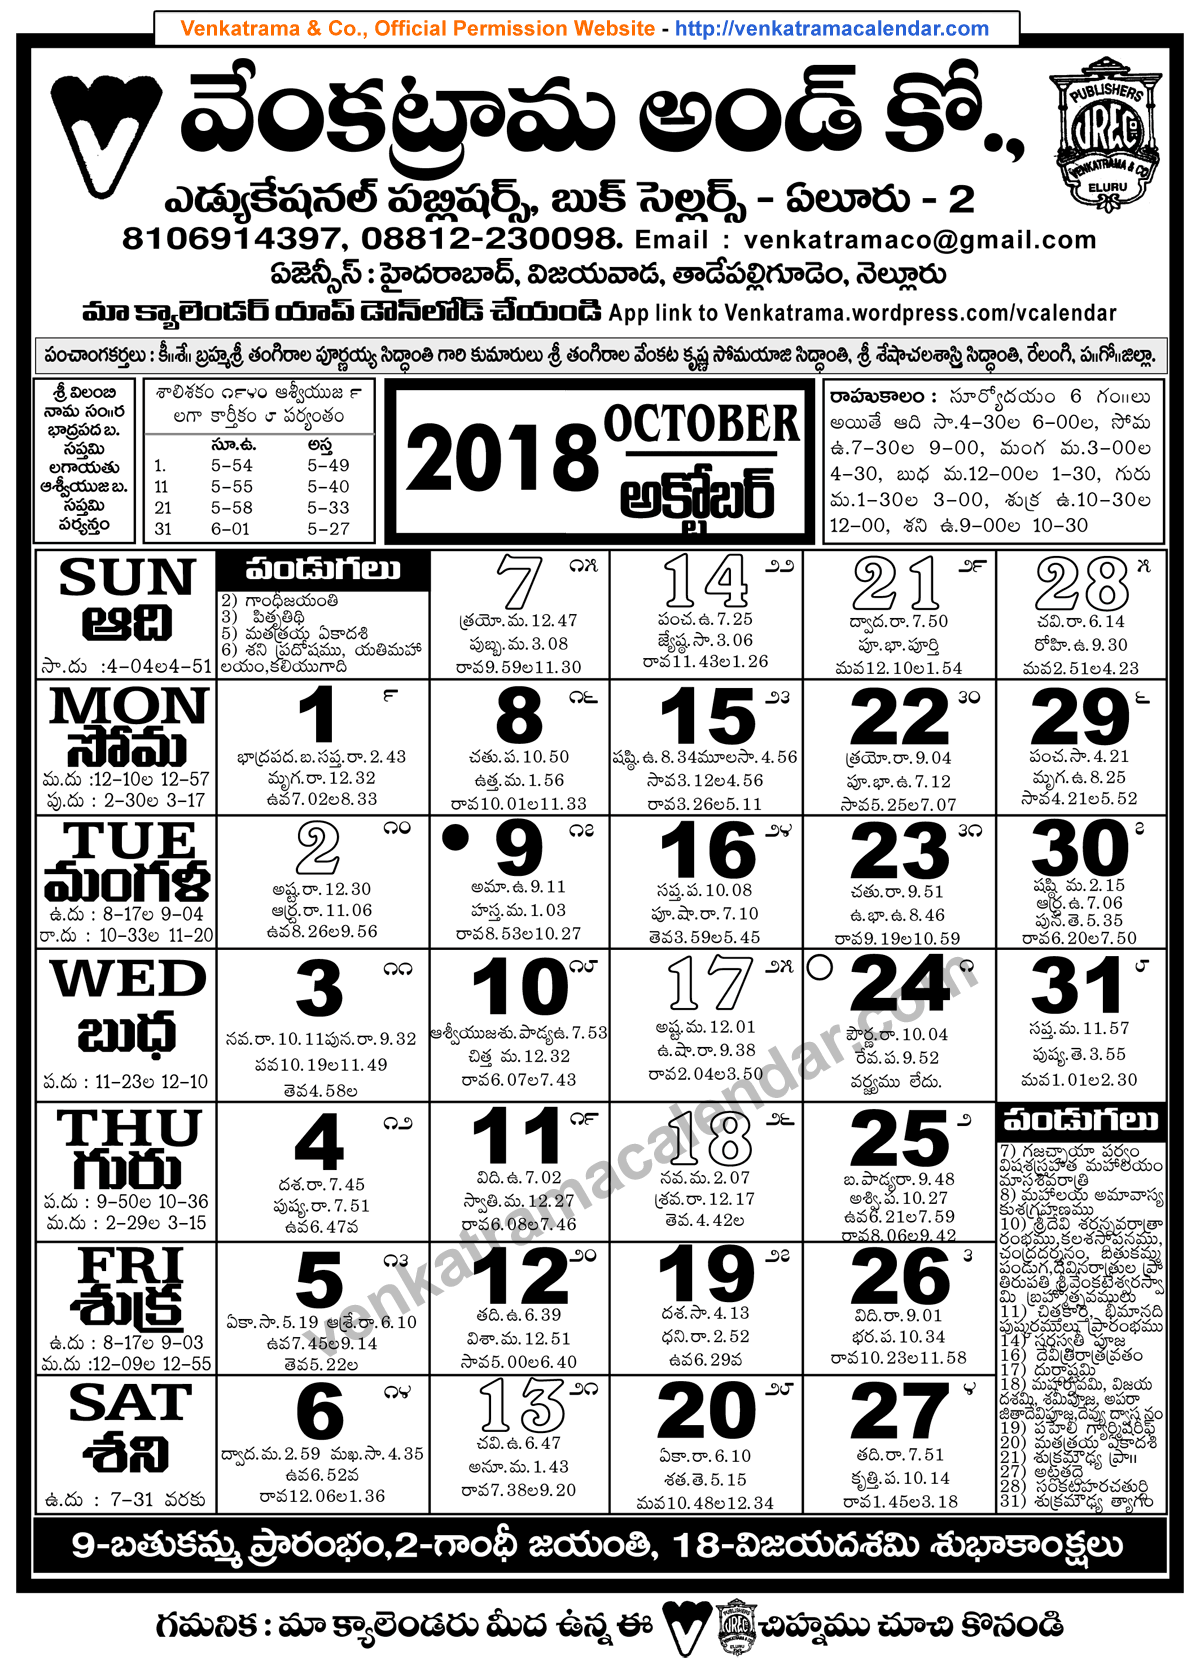 venkatrama-co-2018-october-telugu-calendar-festivals-holidays